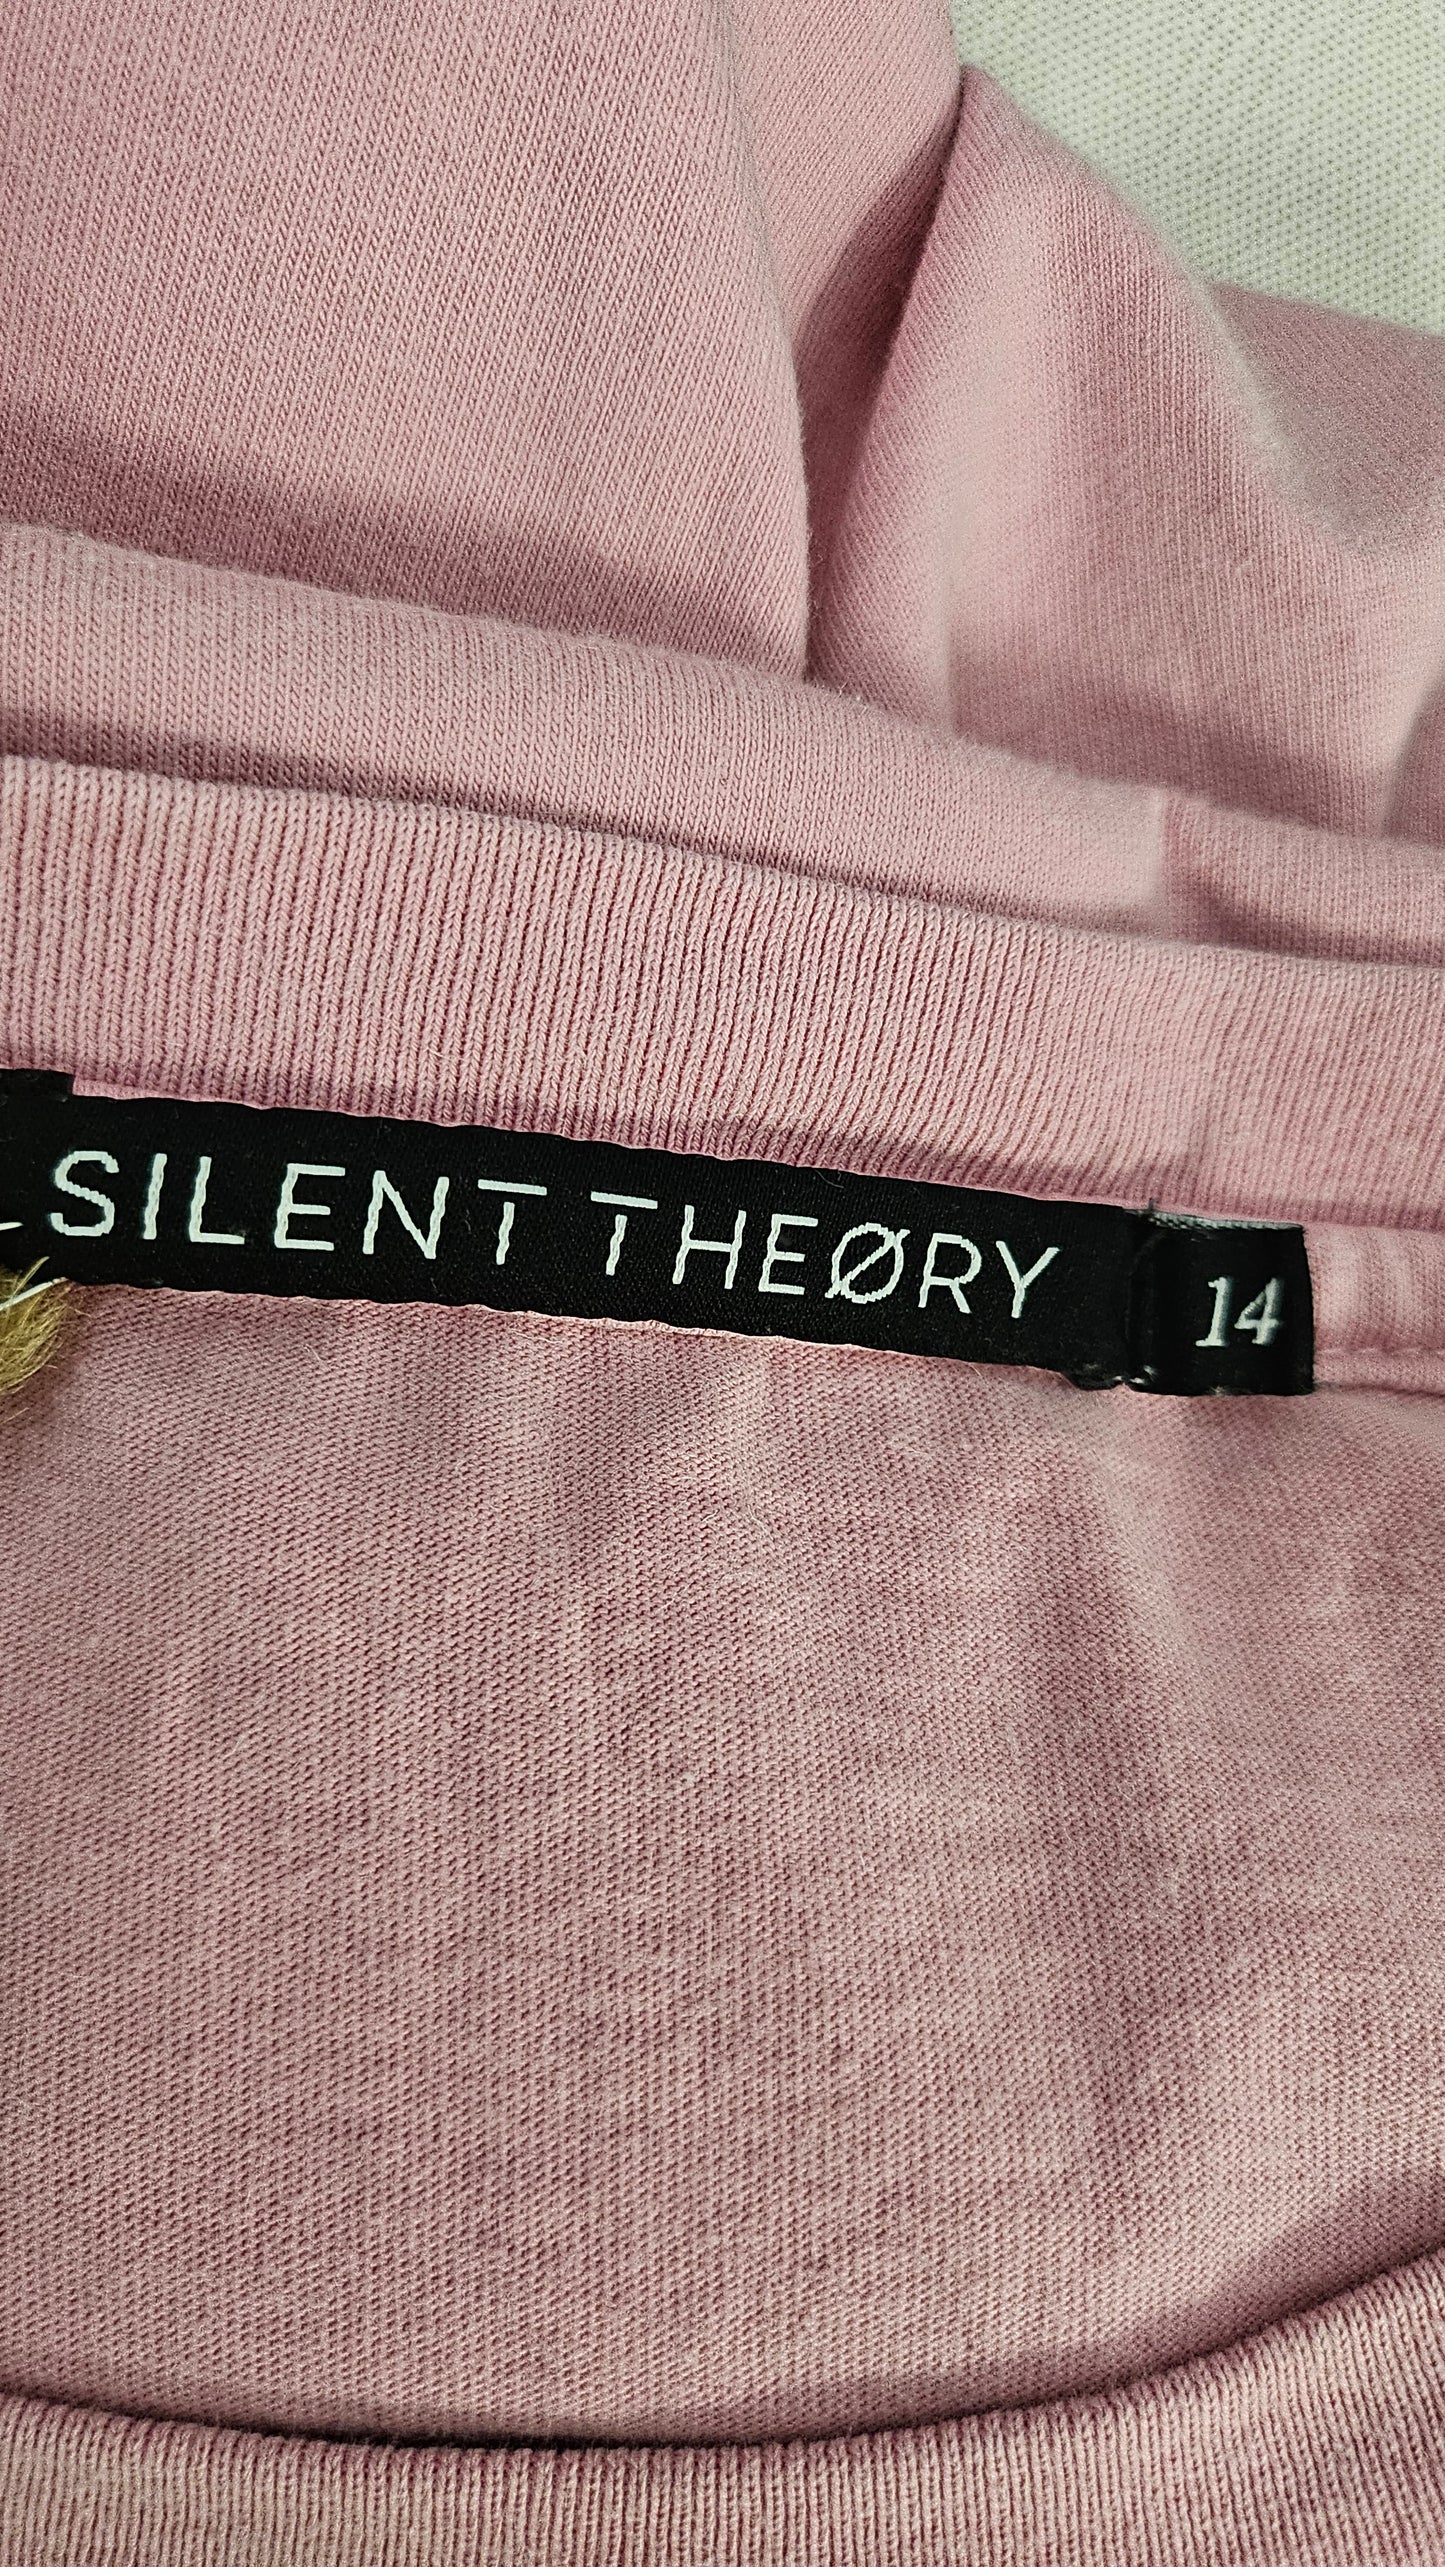 Silent Theory Pink Print Tee (14)